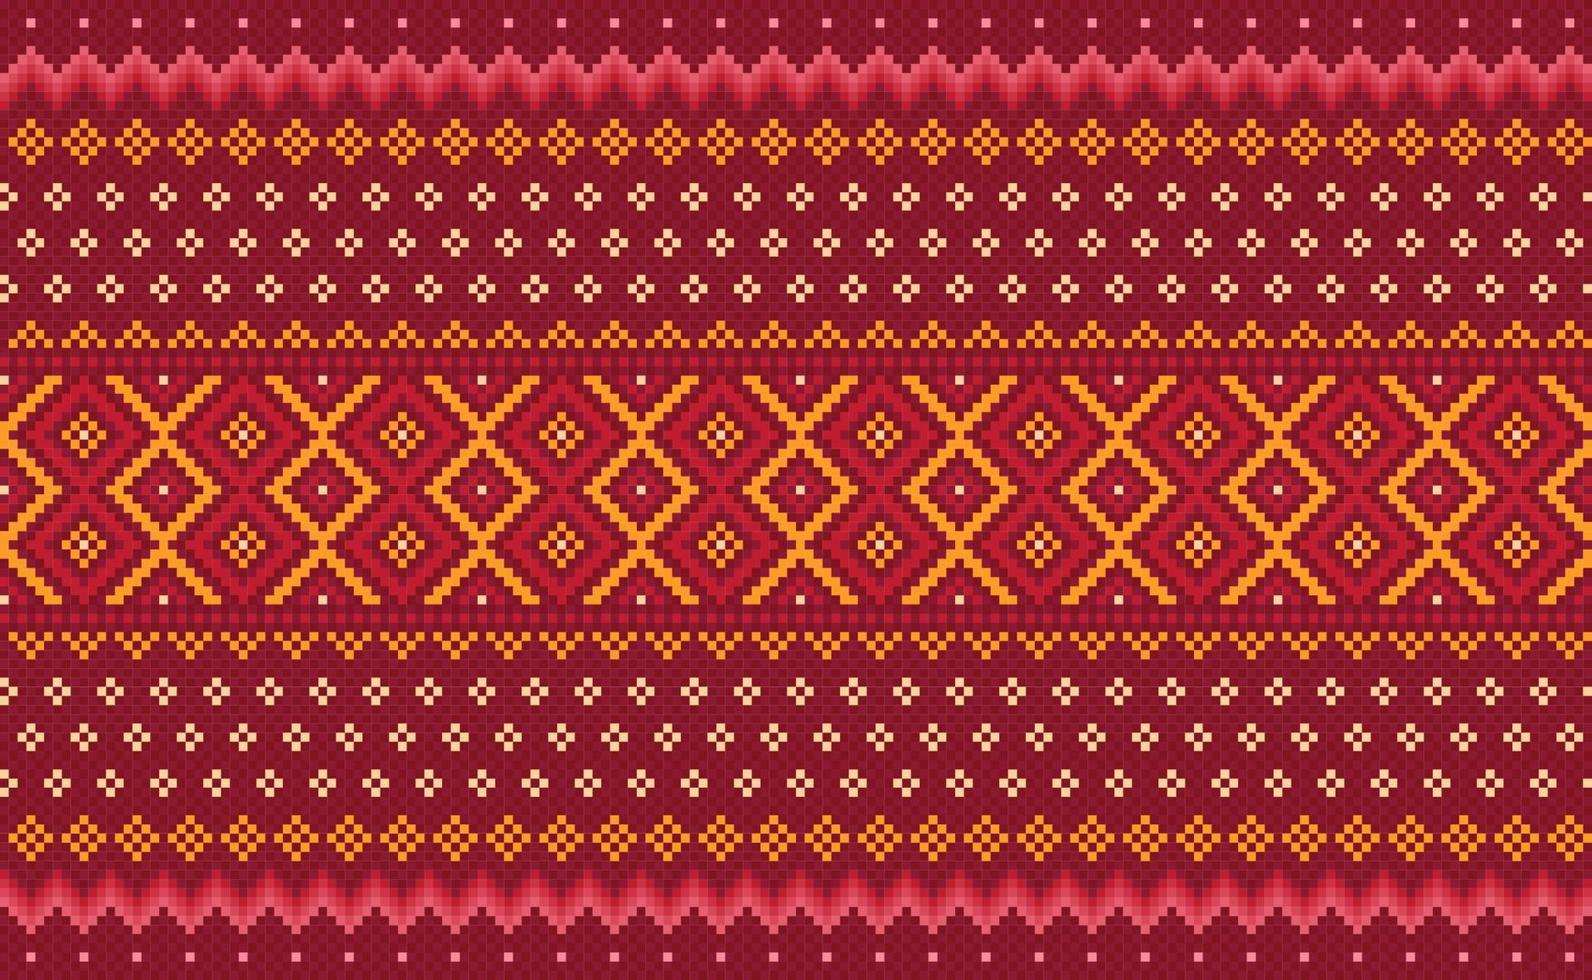 pixel etnisch patroon, vector borduurwerk sier- achtergrond, meetkundig kruis steek driehoek stijl